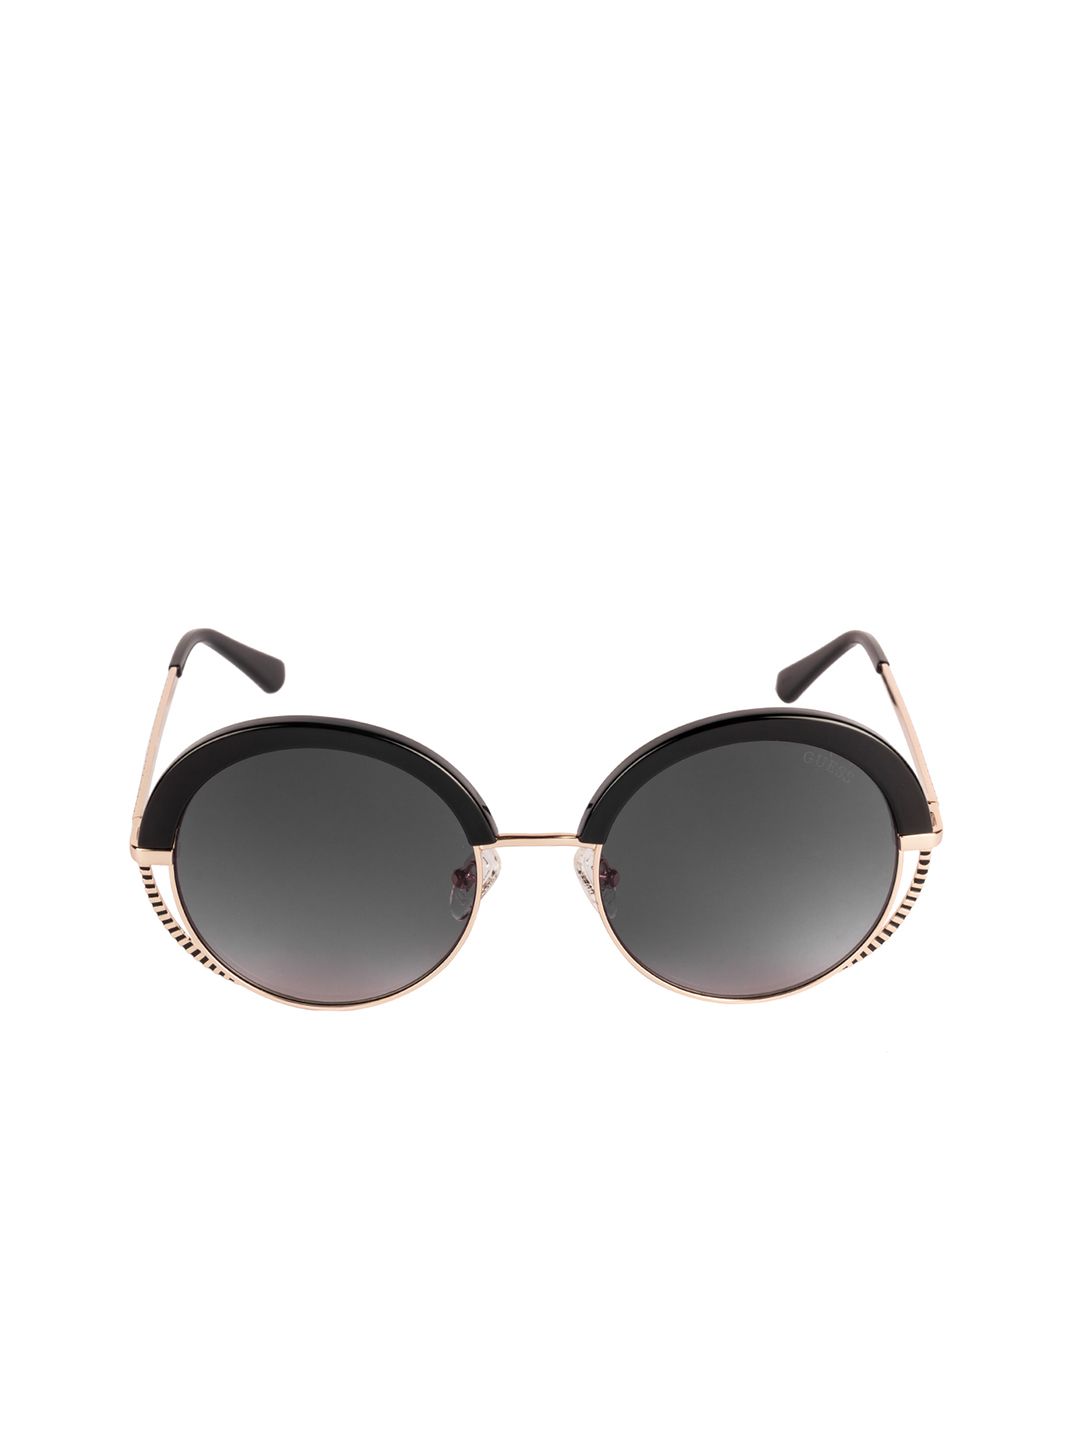 GUESS Women Round Sunglasses GU7621 54 01B Price in India